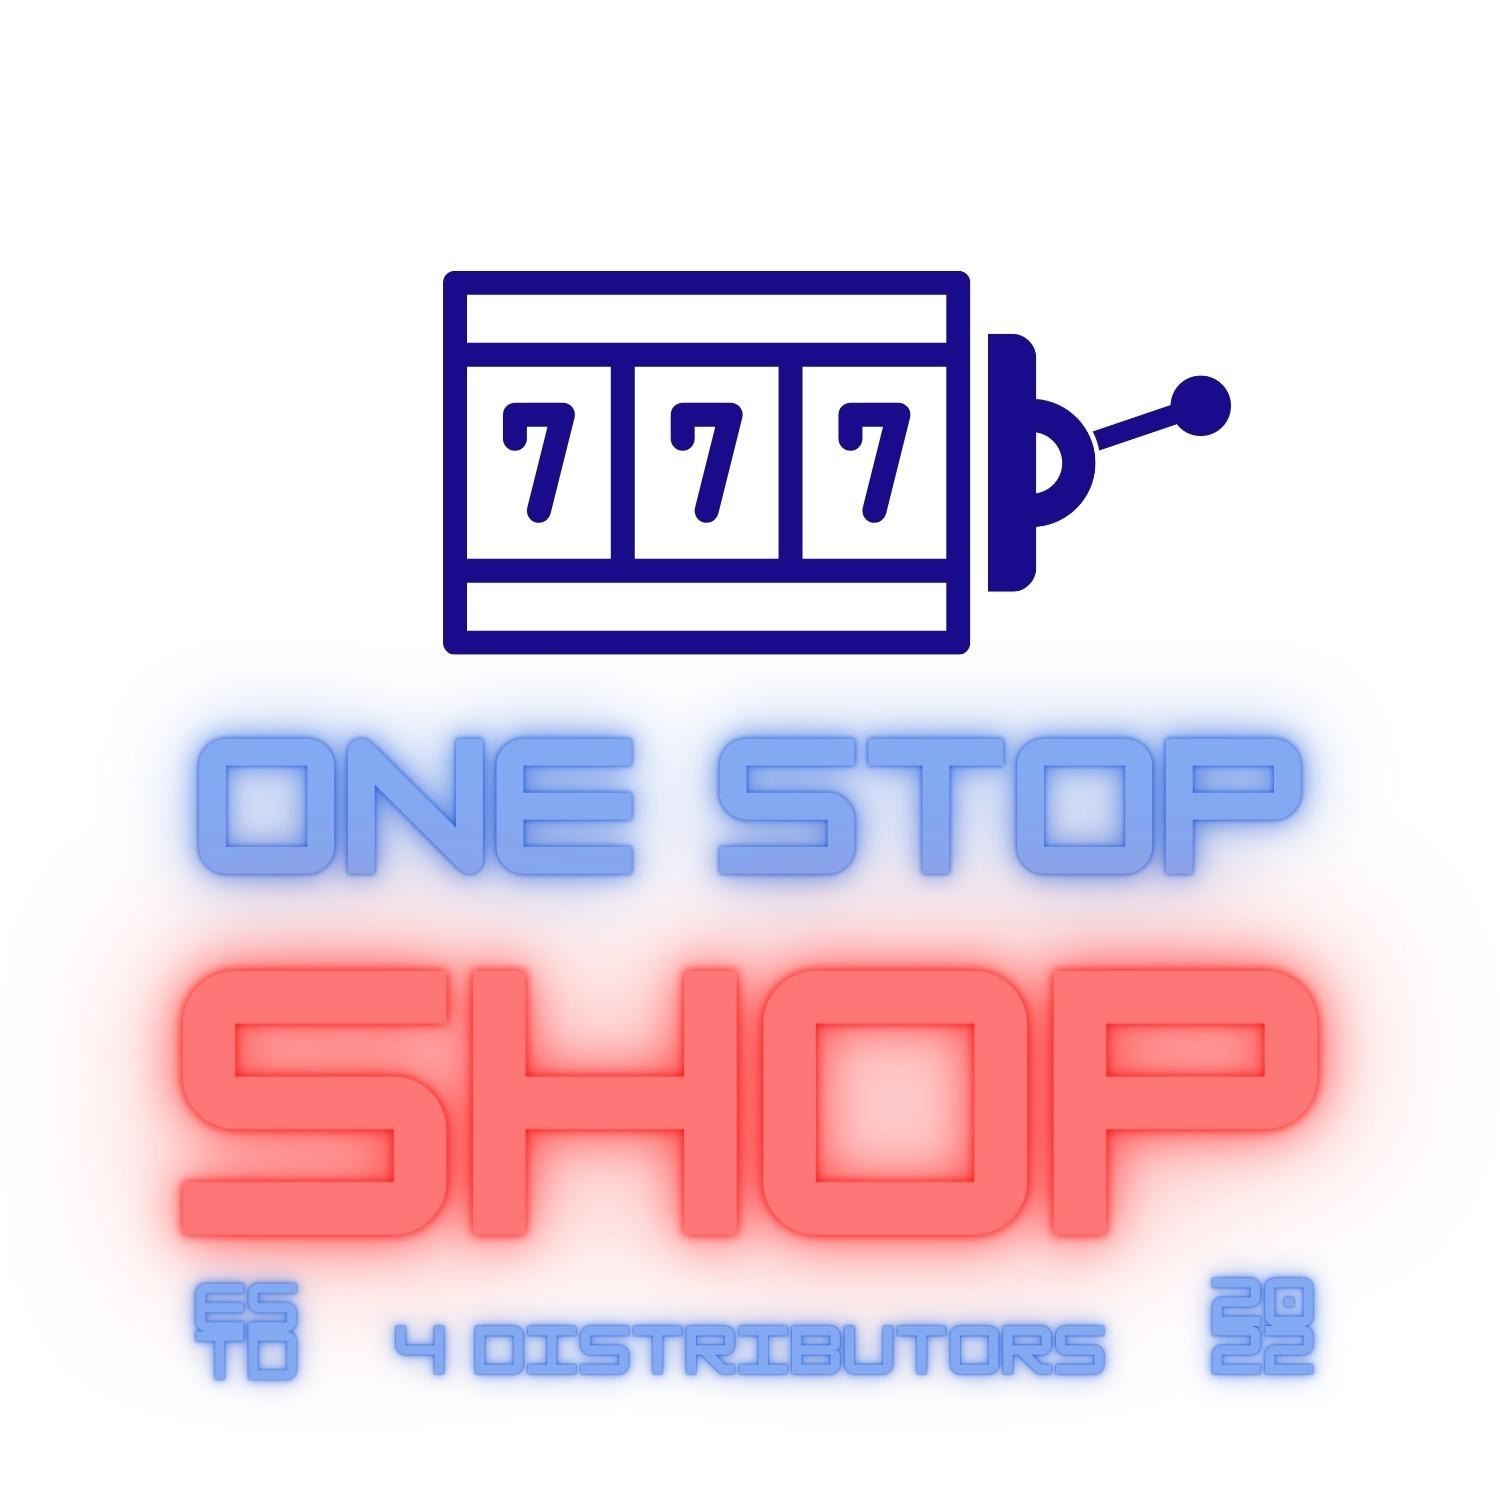 One Stop Shop 4 Distributors - Raleigh, NC 27612 - (919)633-3883 | ShowMeLocal.com